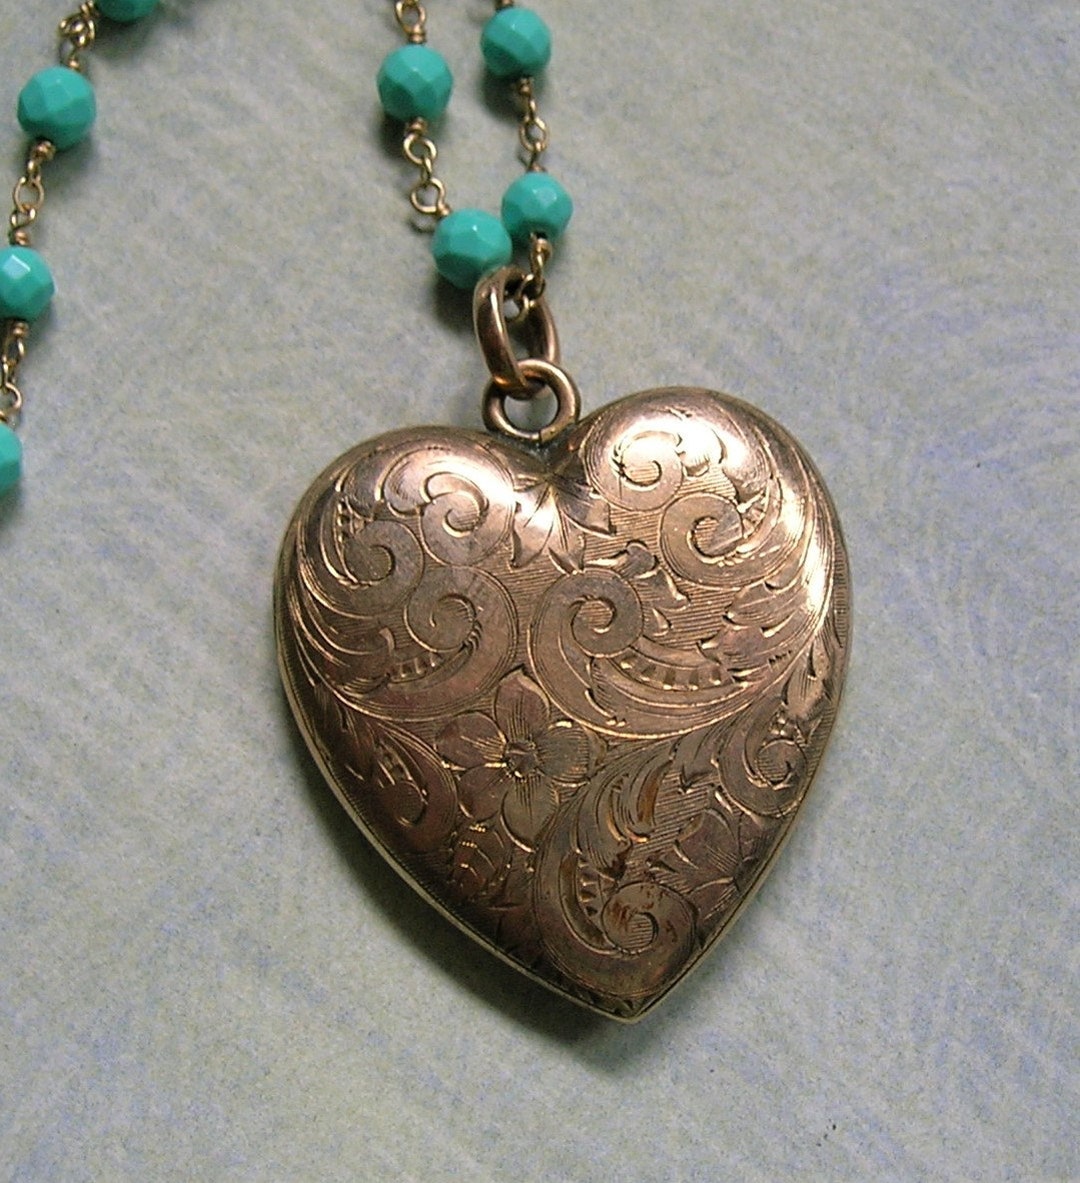 Vintage Heart Locket Pendant and Italian Sterling Silver Chain | eBay